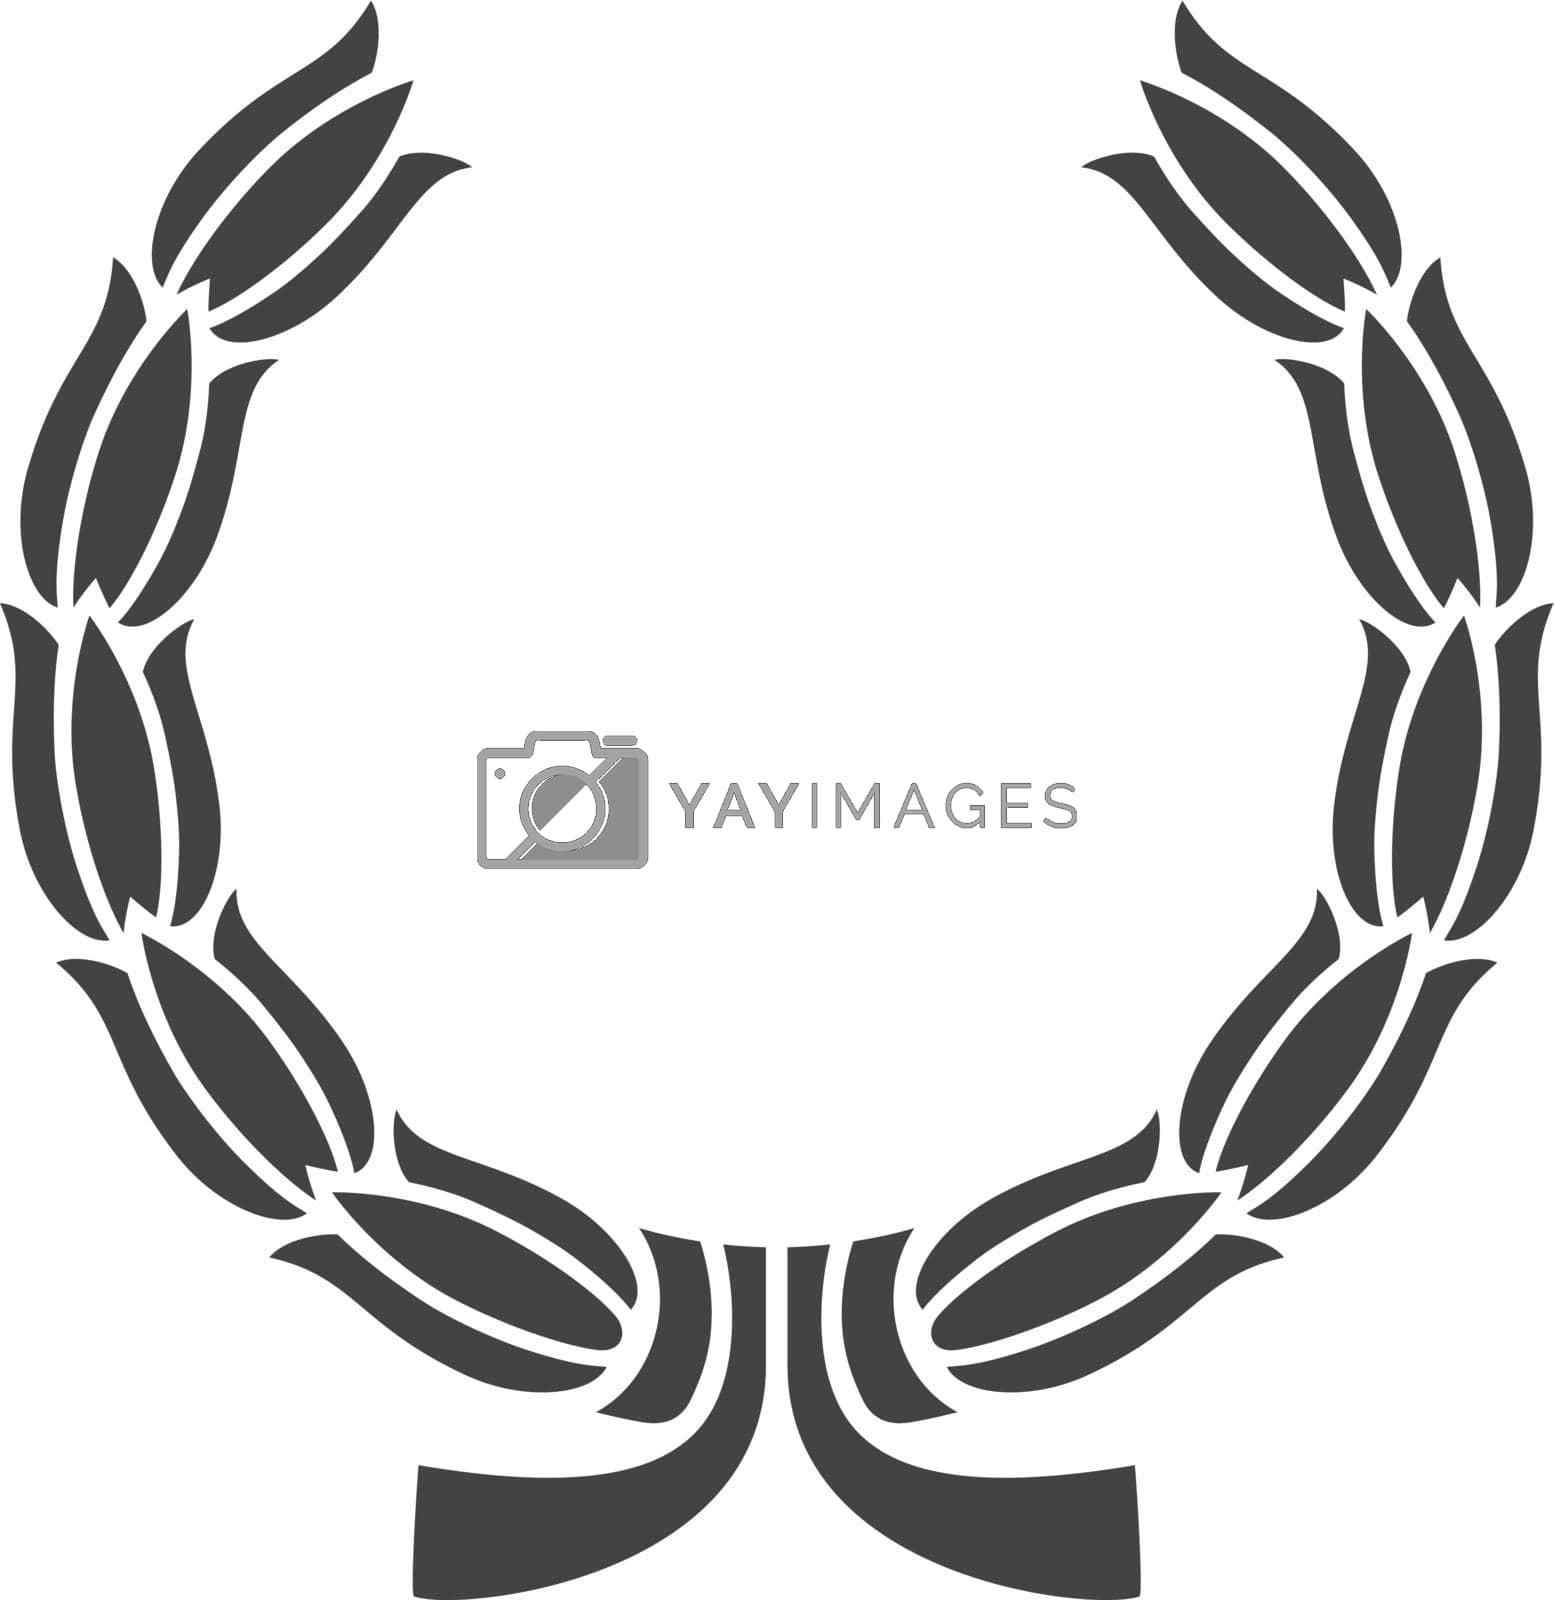 Royalty free image of Award wreath. Illustrated wreathes design graphic award element by LadadikArt